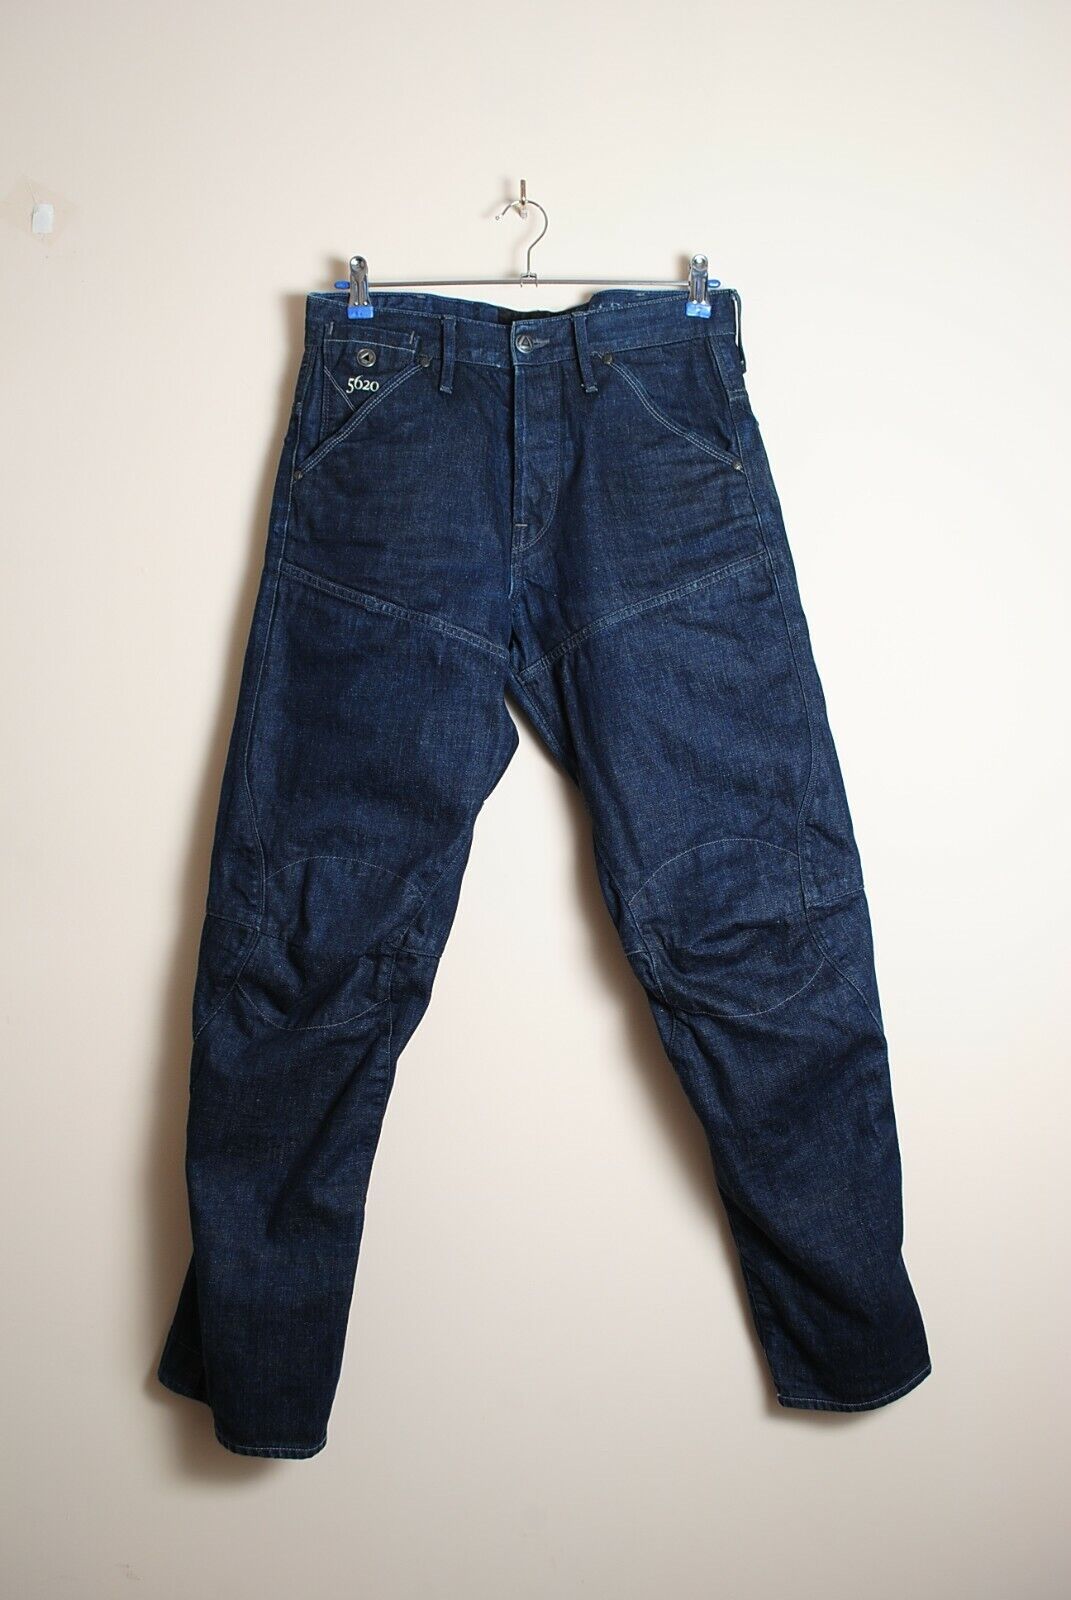 G Star 5620 3D Loose Jeans Size 30x32 eBay